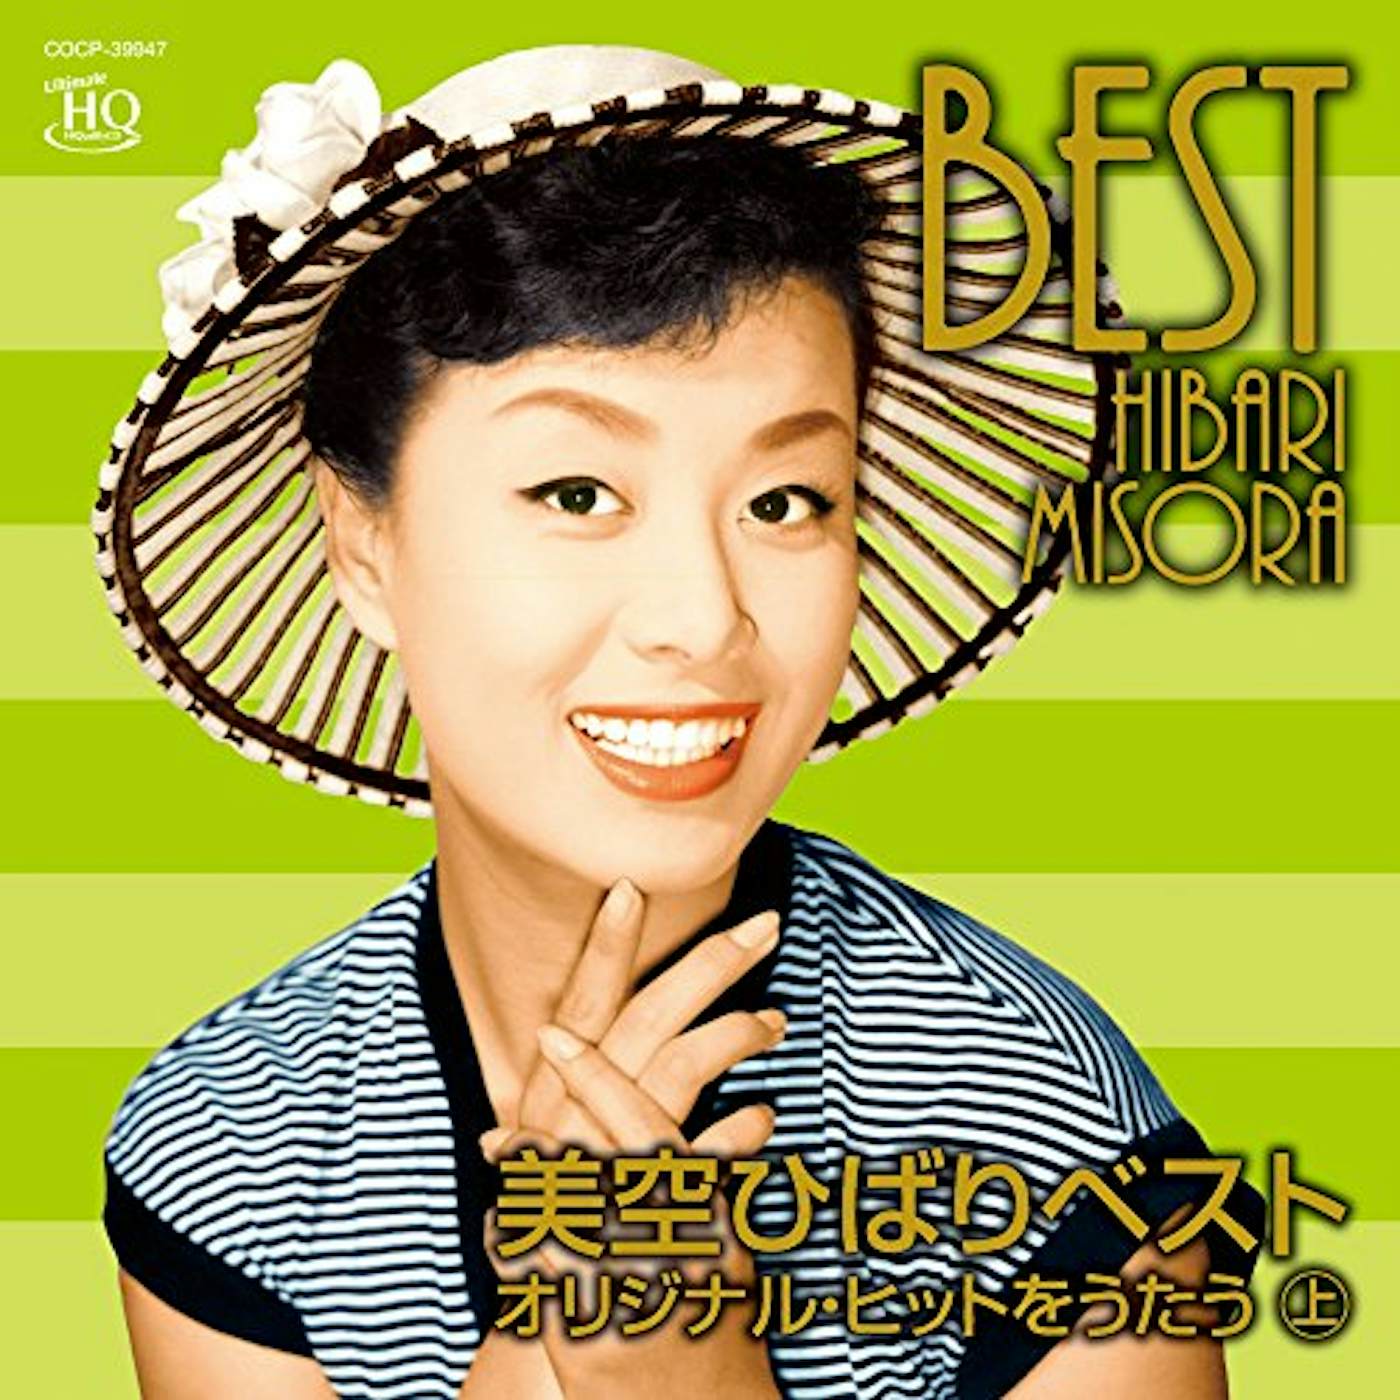 Hibari Misora BEST: ORIGINAL HITS VOL 1 CD